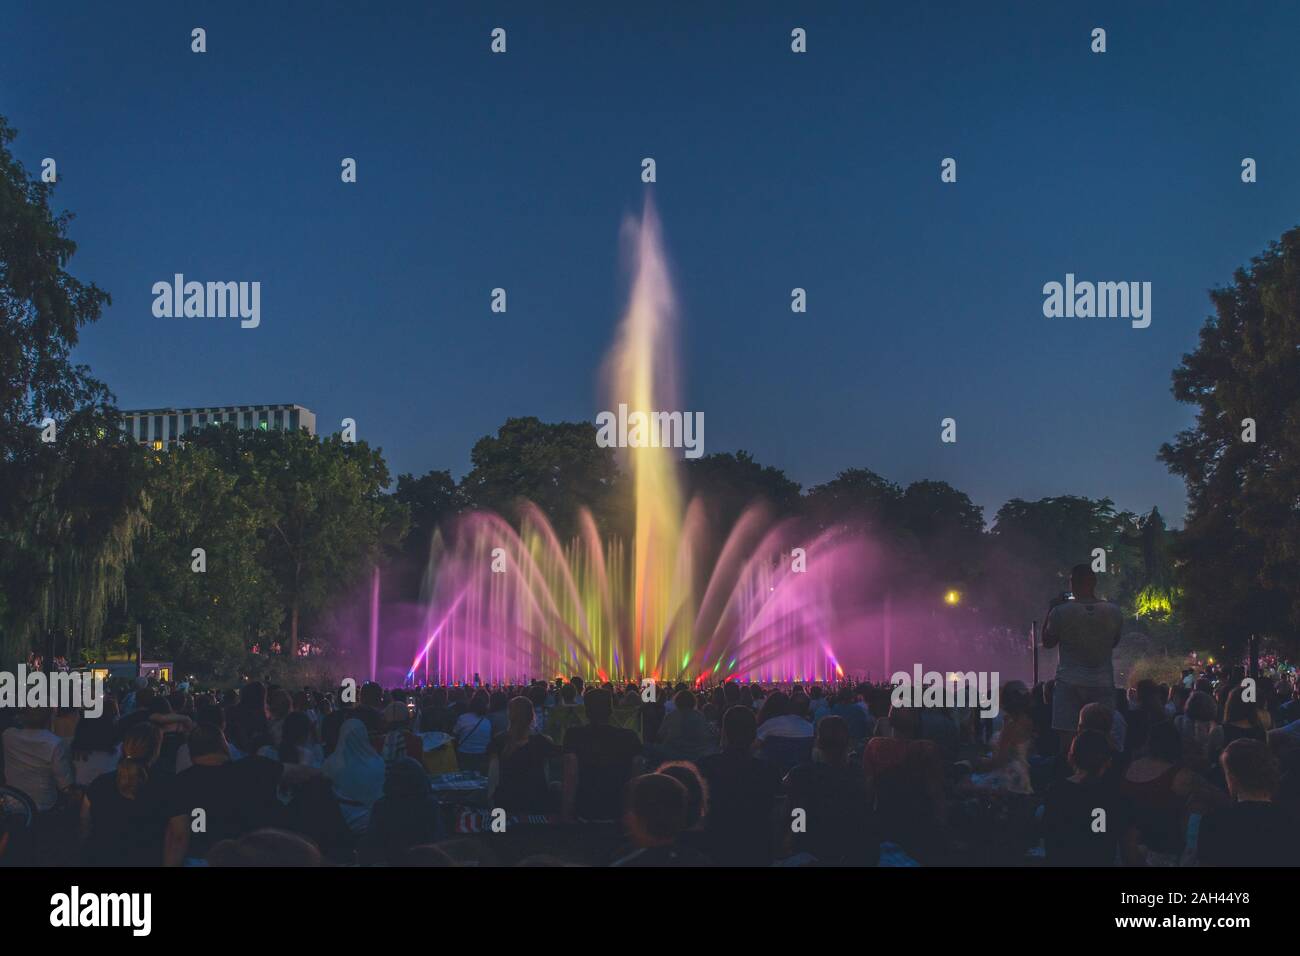 Germany, Hamburg, People watching illuminated fountain at night Stock Photo